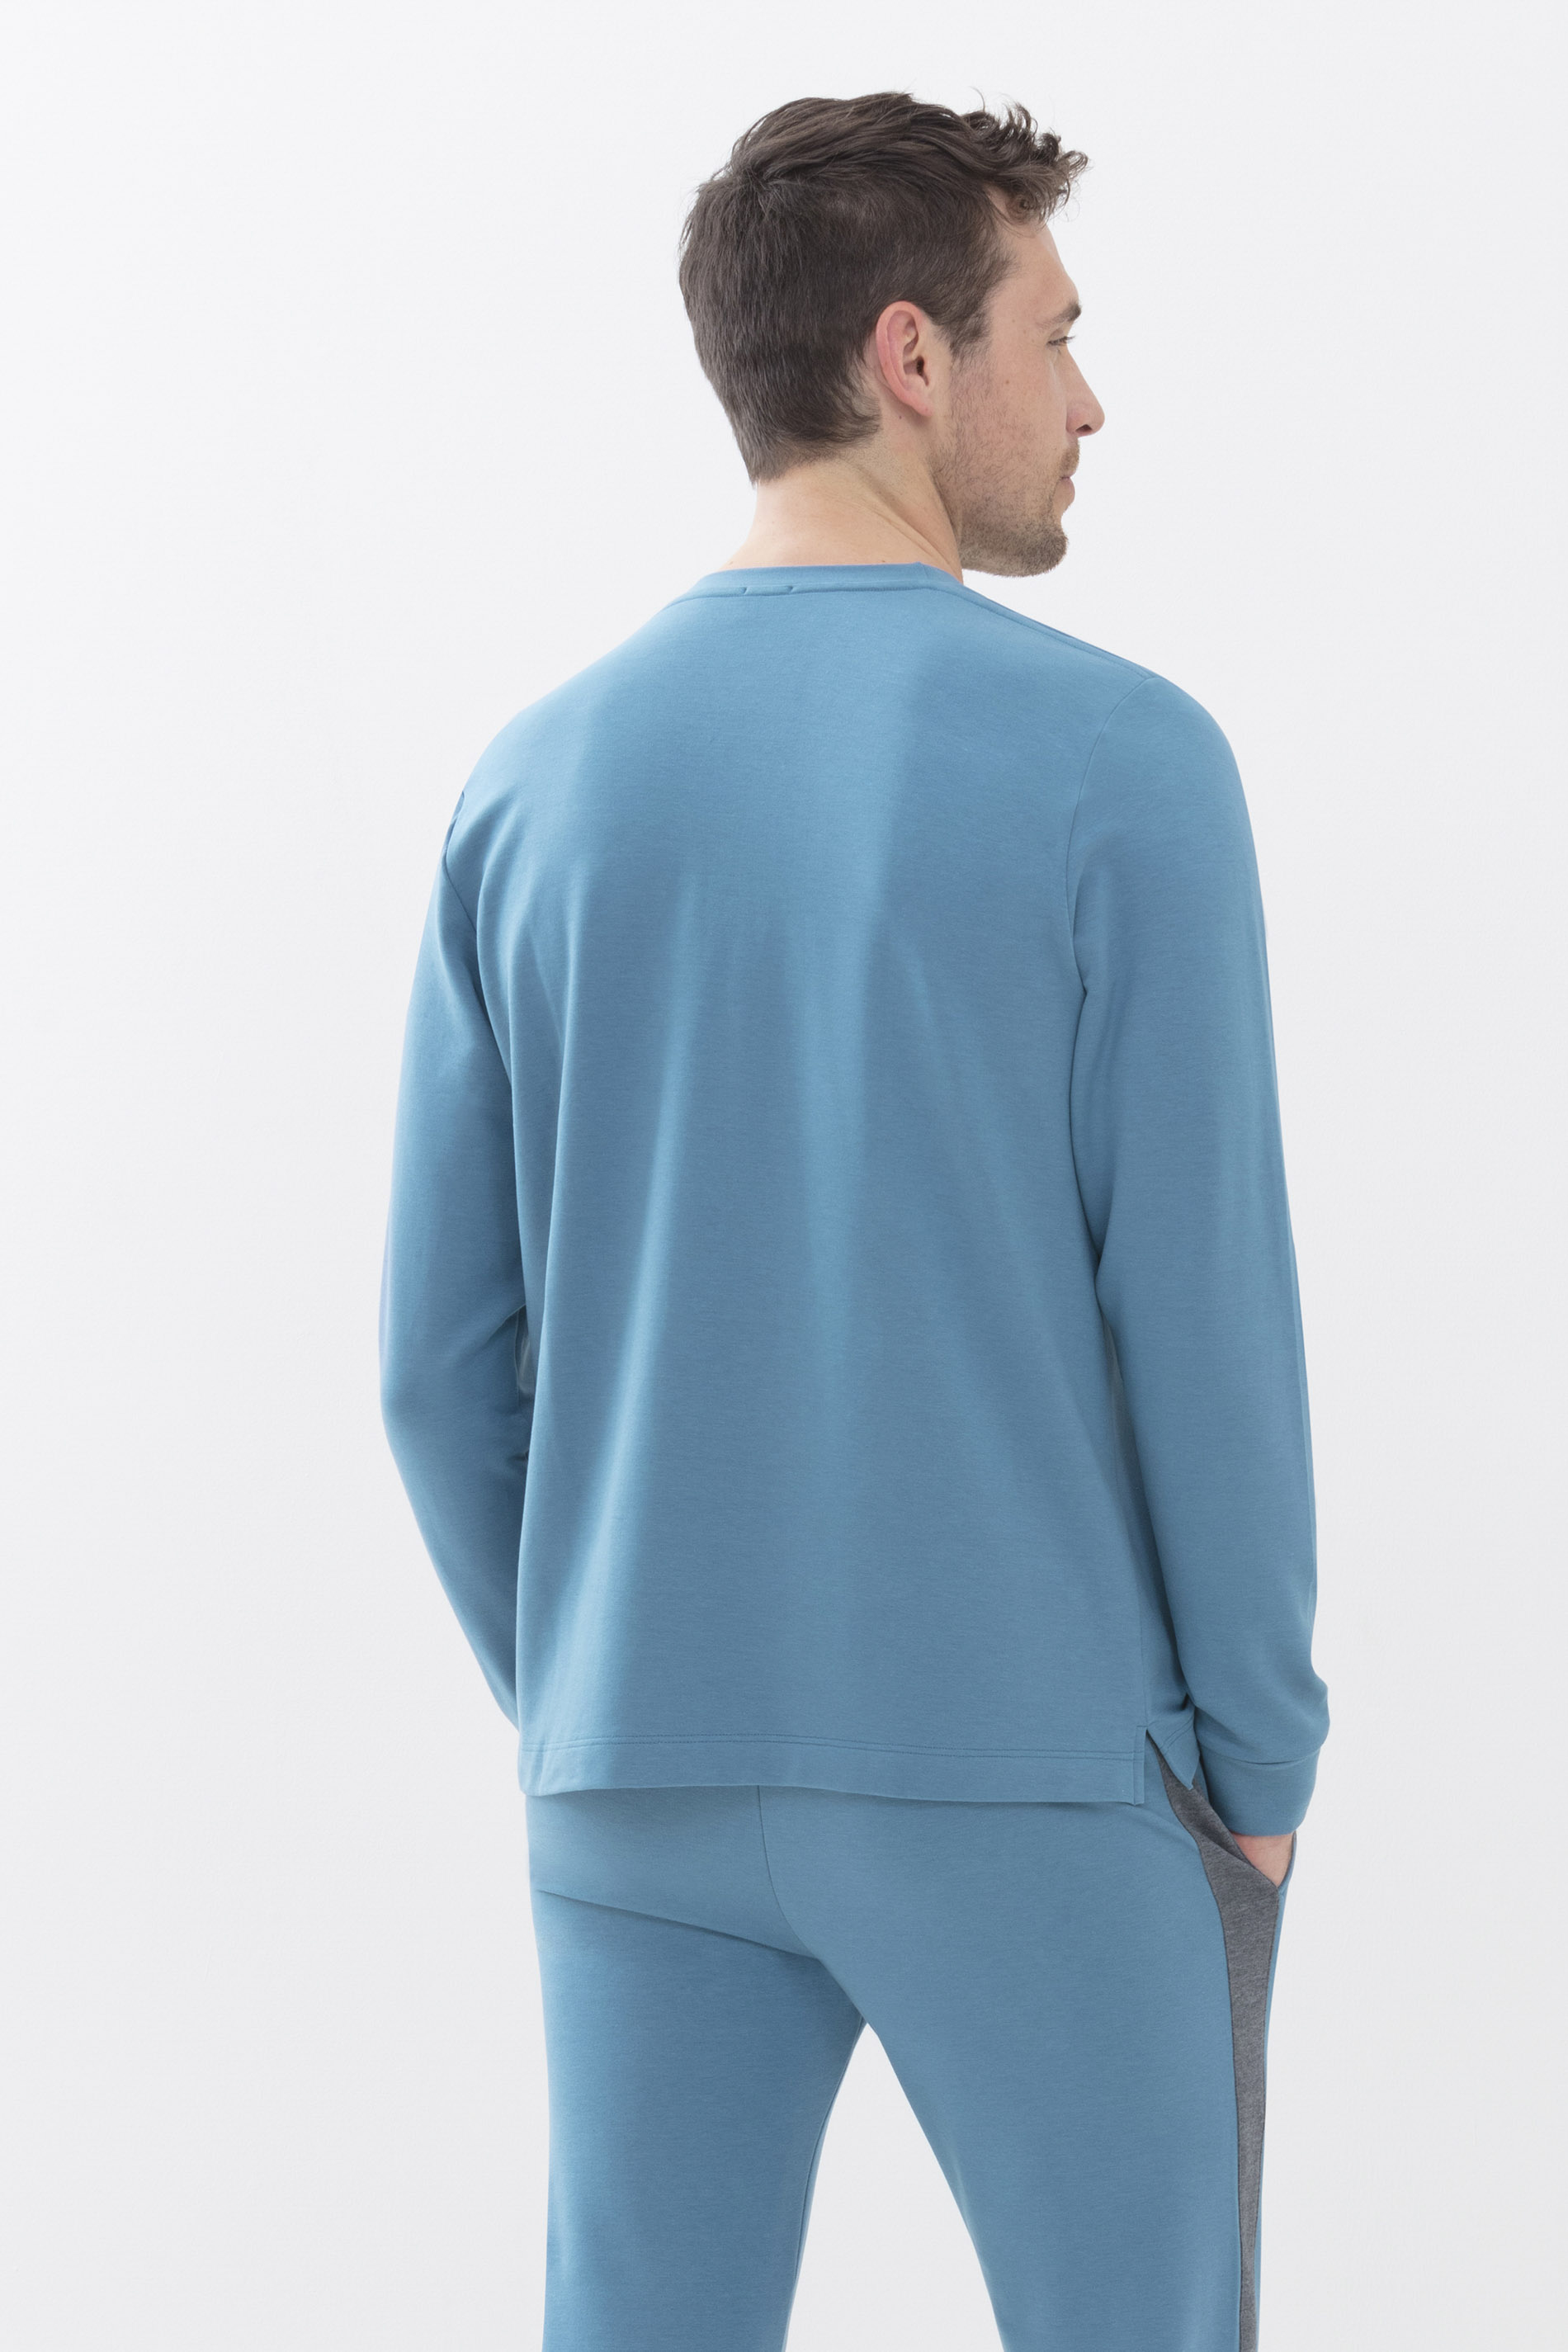 Long sleeves Yale Blue Serie Enjoy Colour Rear View | mey®